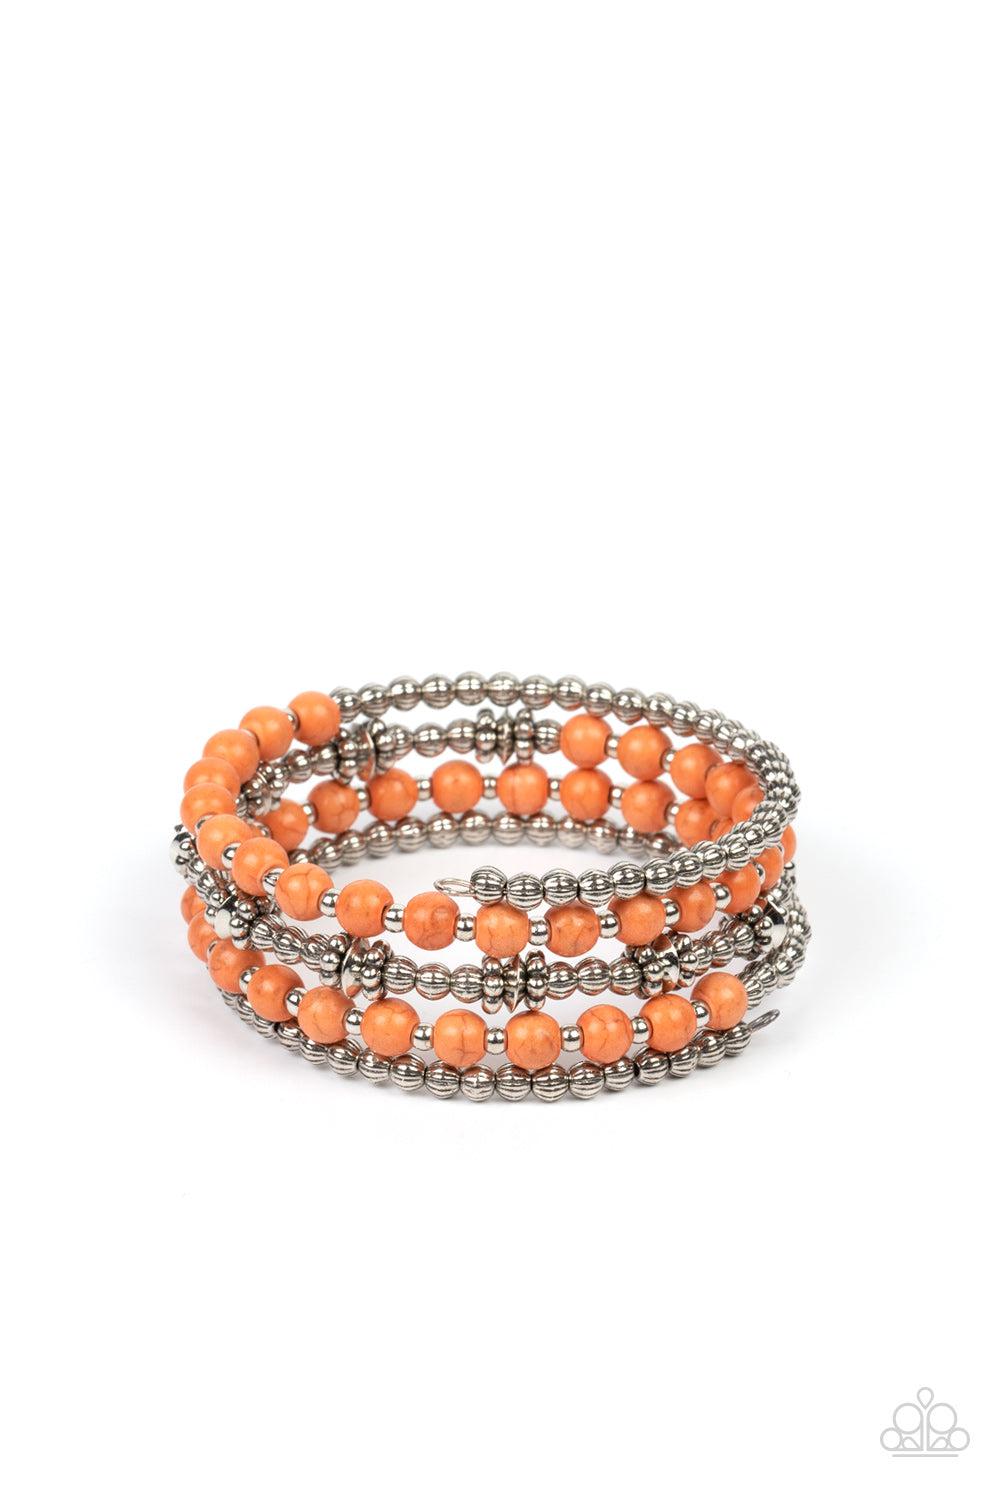 Road Trip Remix Orange Stone Coil Bracelet - Paparazzi Accessories- lightbox - CarasShop.com - $5 Jewelry by Cara Jewels